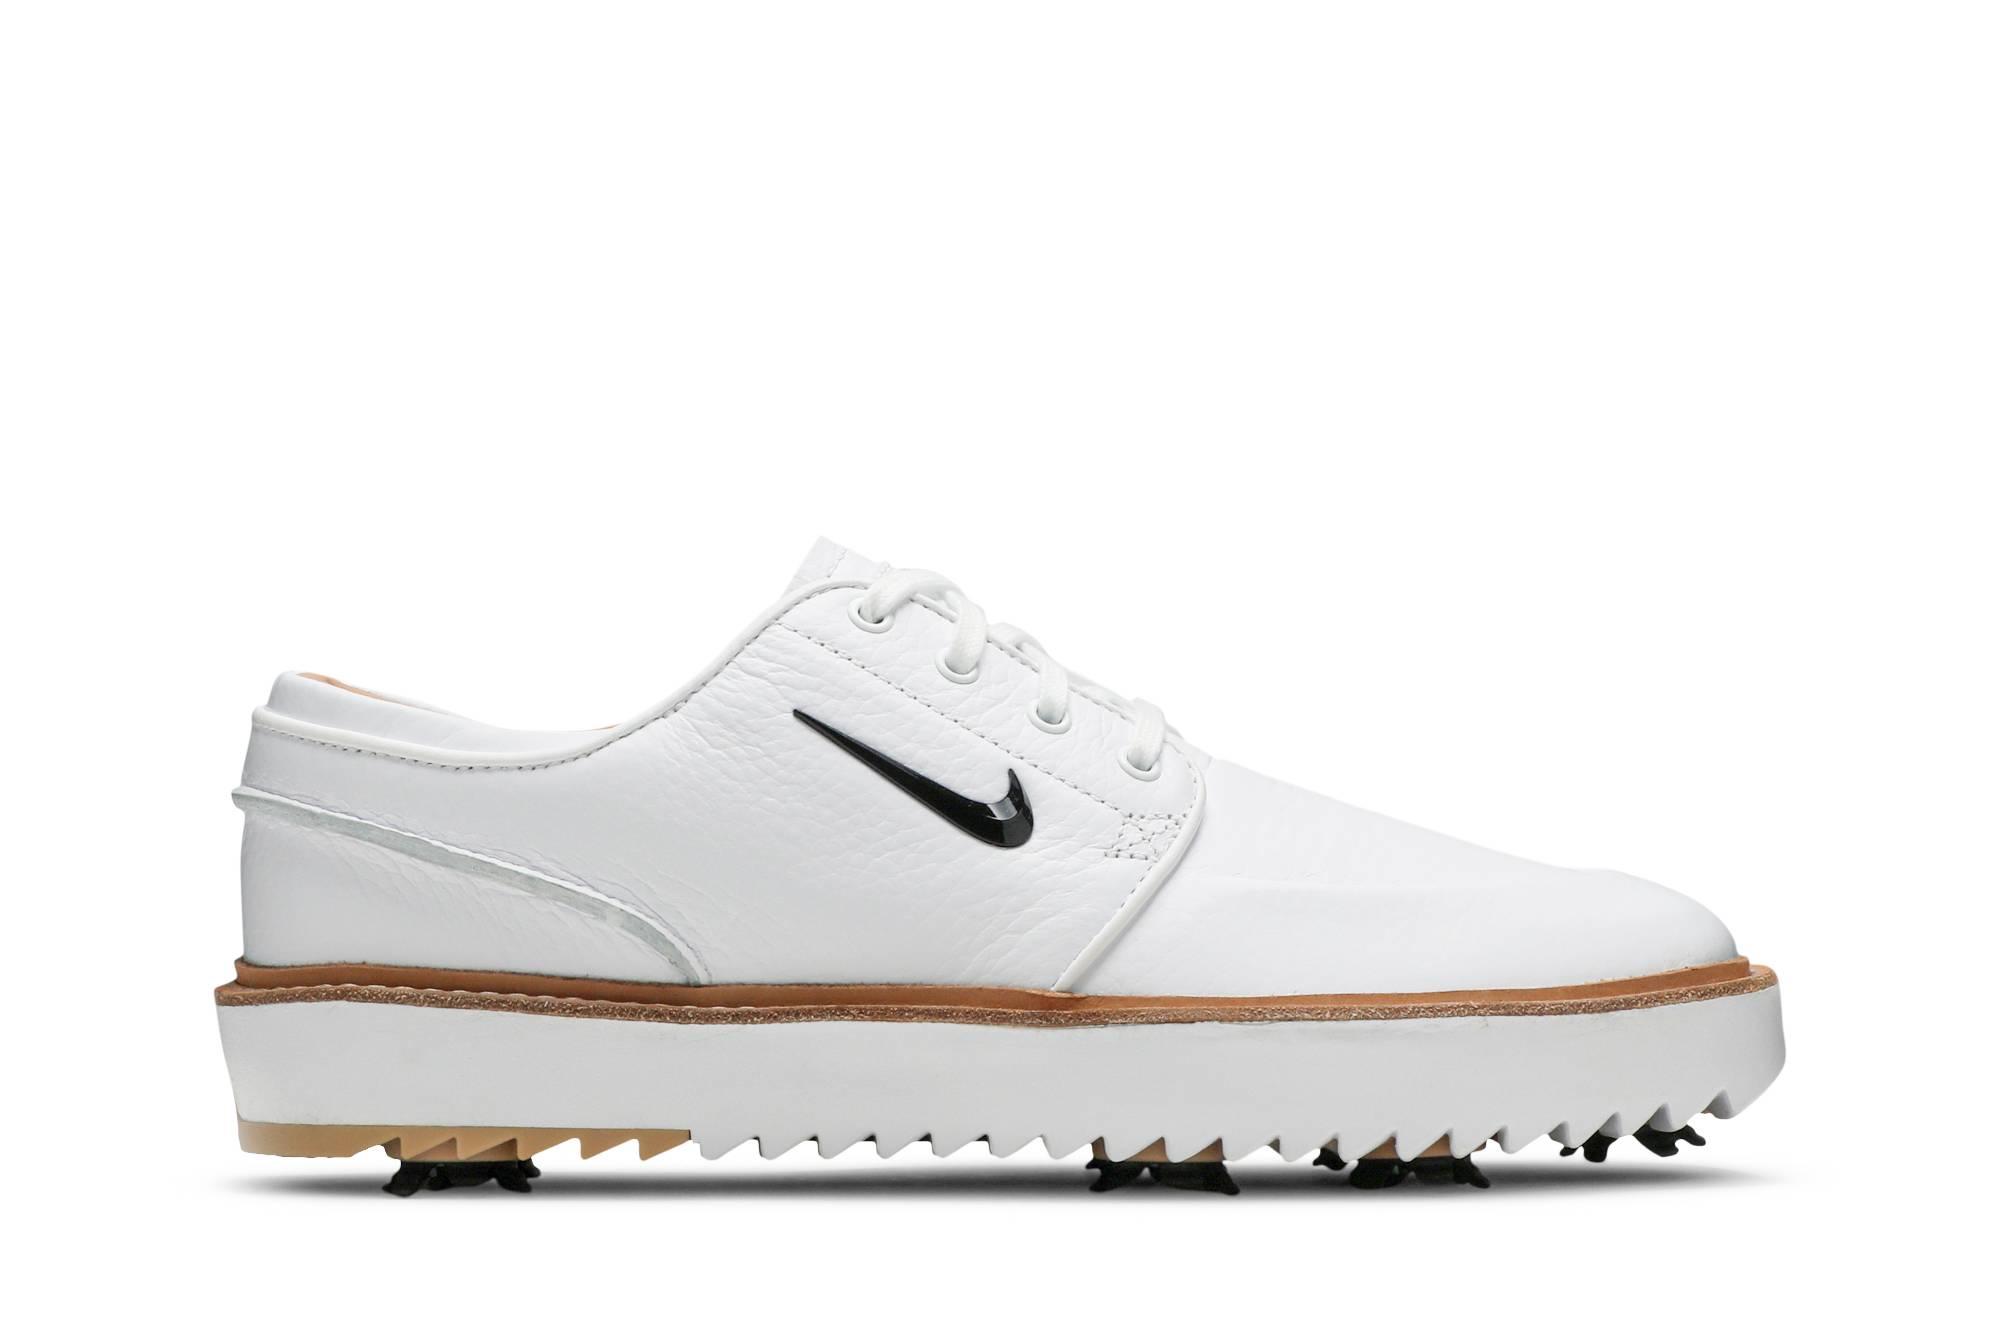 Nike Janoski G Tour Golf Shoe in White for Men - Save 61% - Lyst